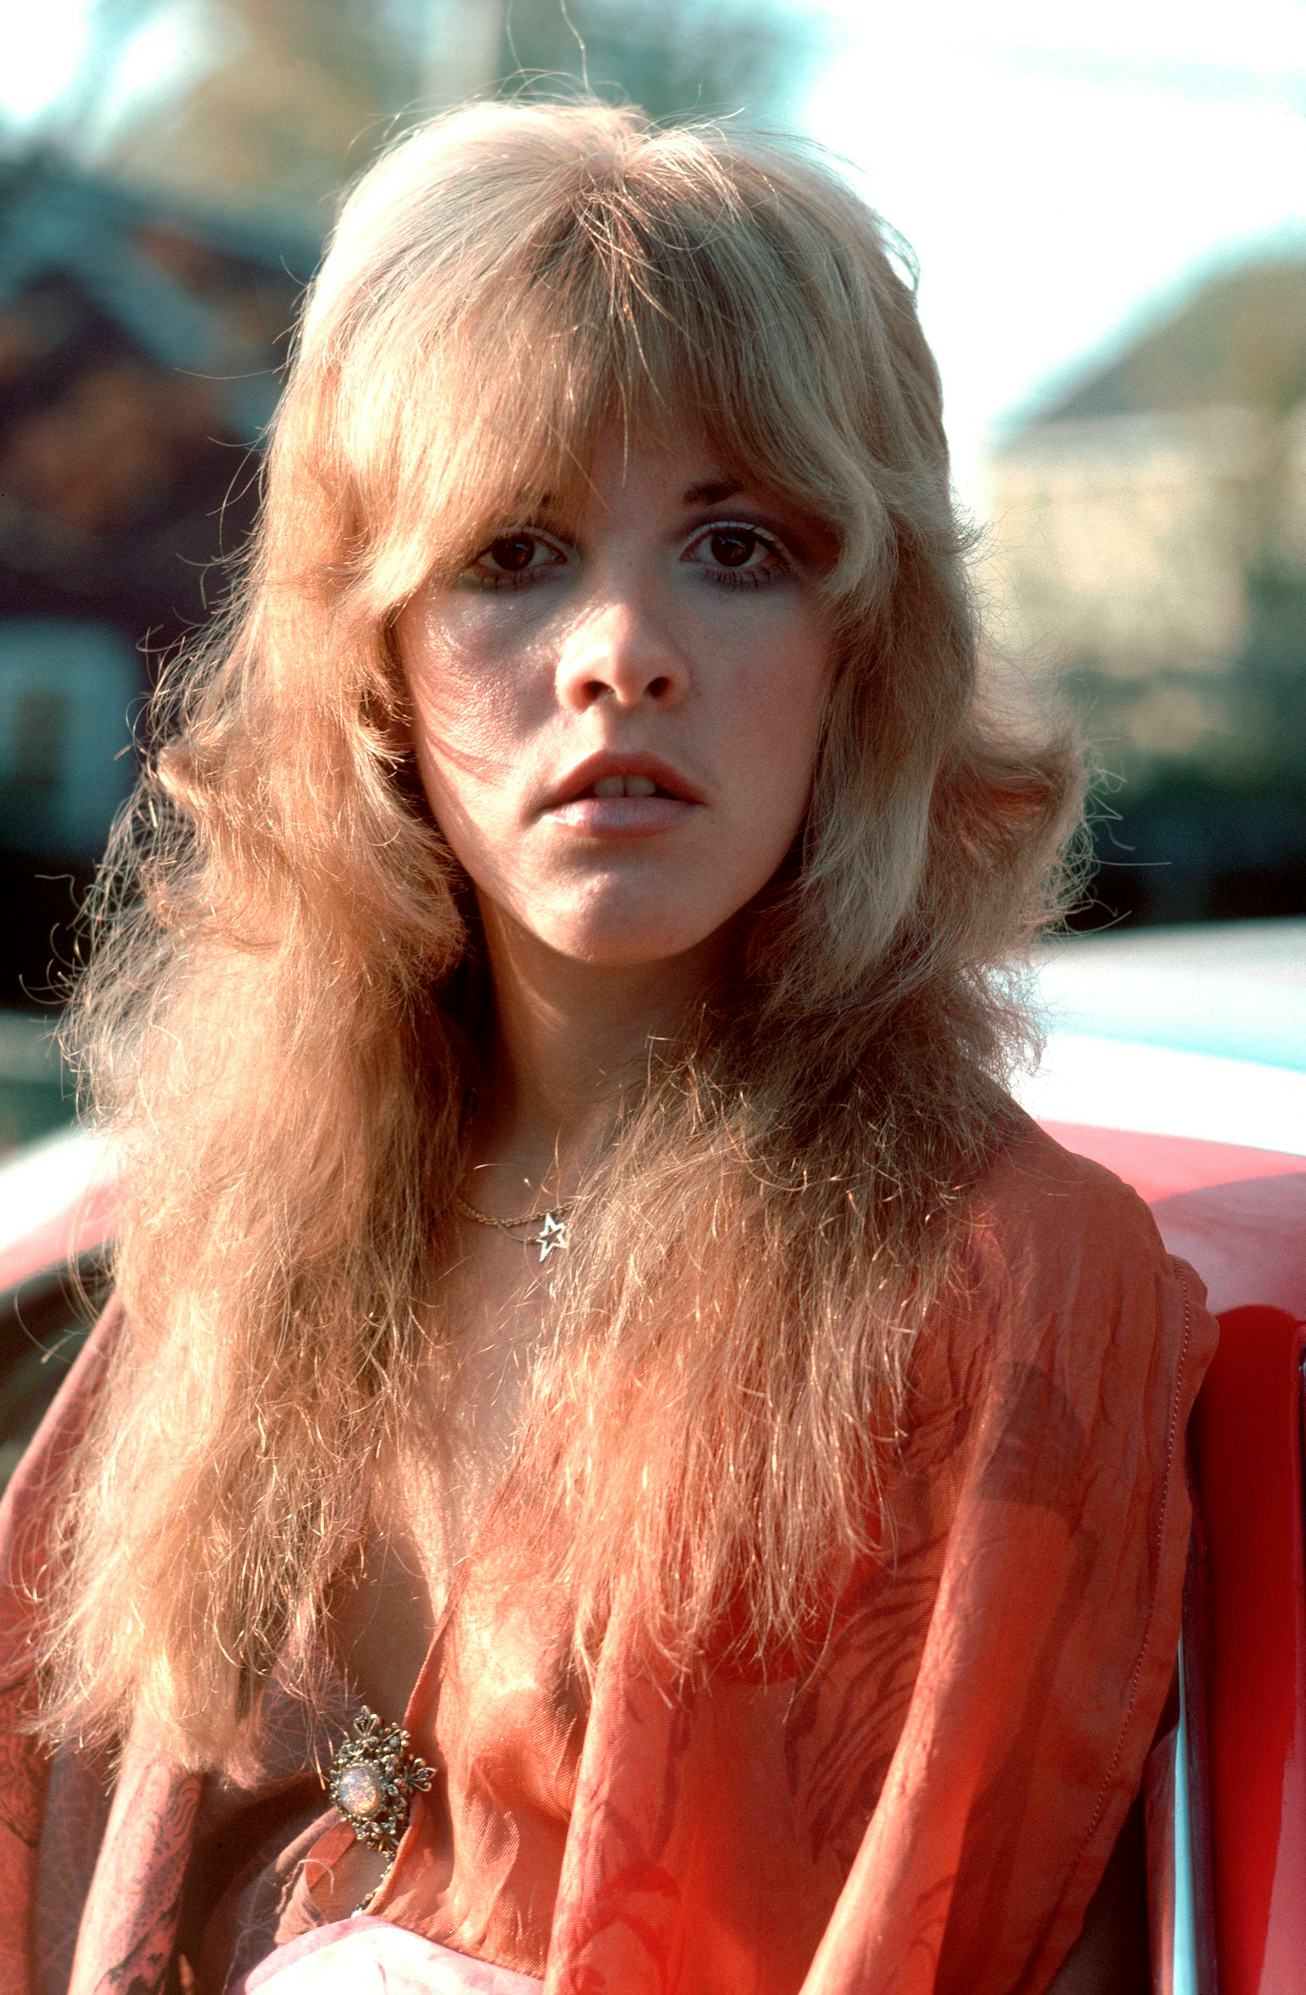 Stevie Nicks with fluffy blonde hair.